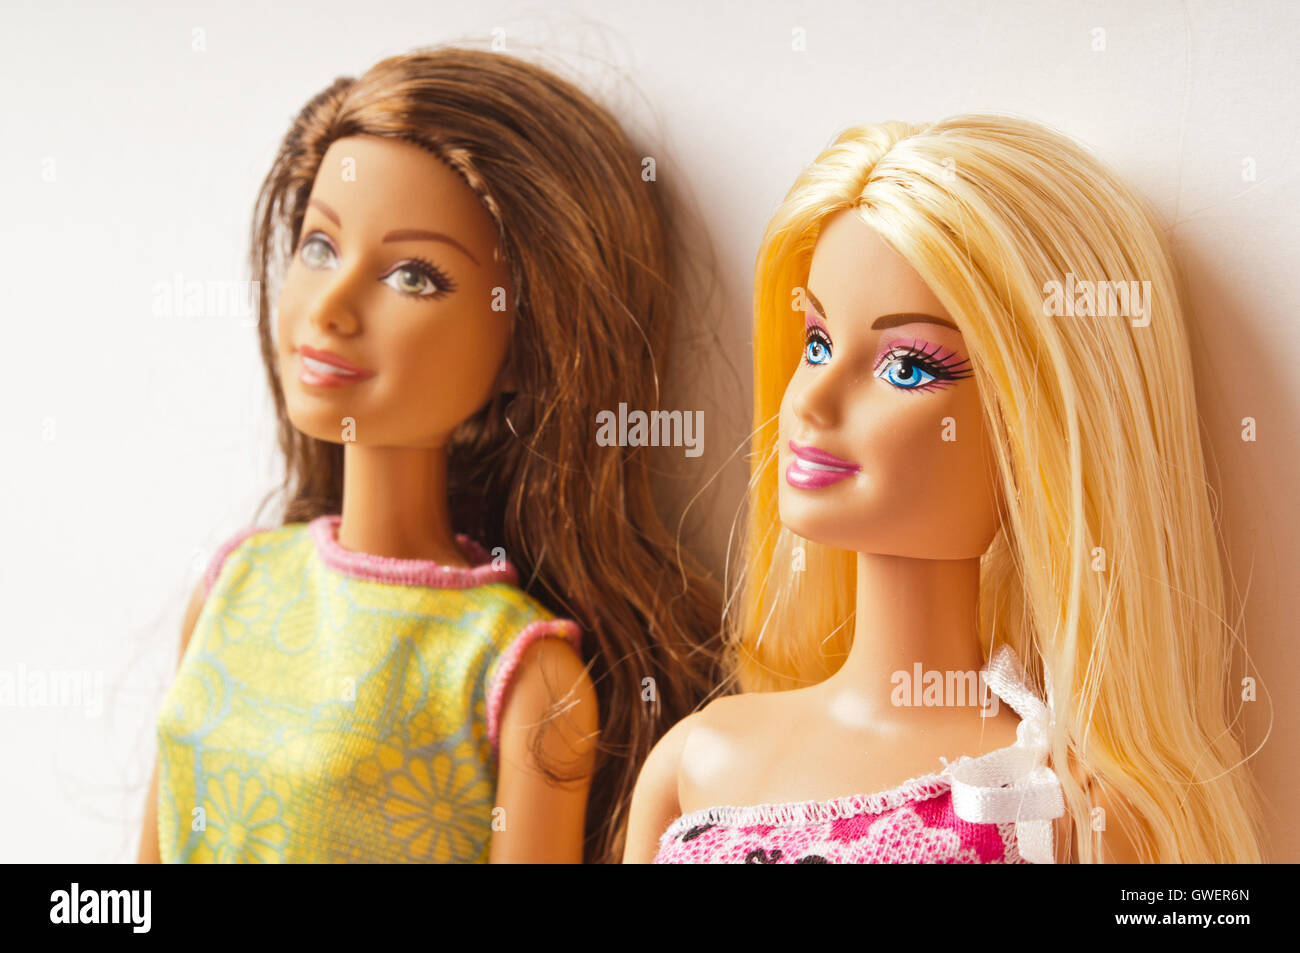 brunette and blonde Barbie dolls Stock Photo - Alamy